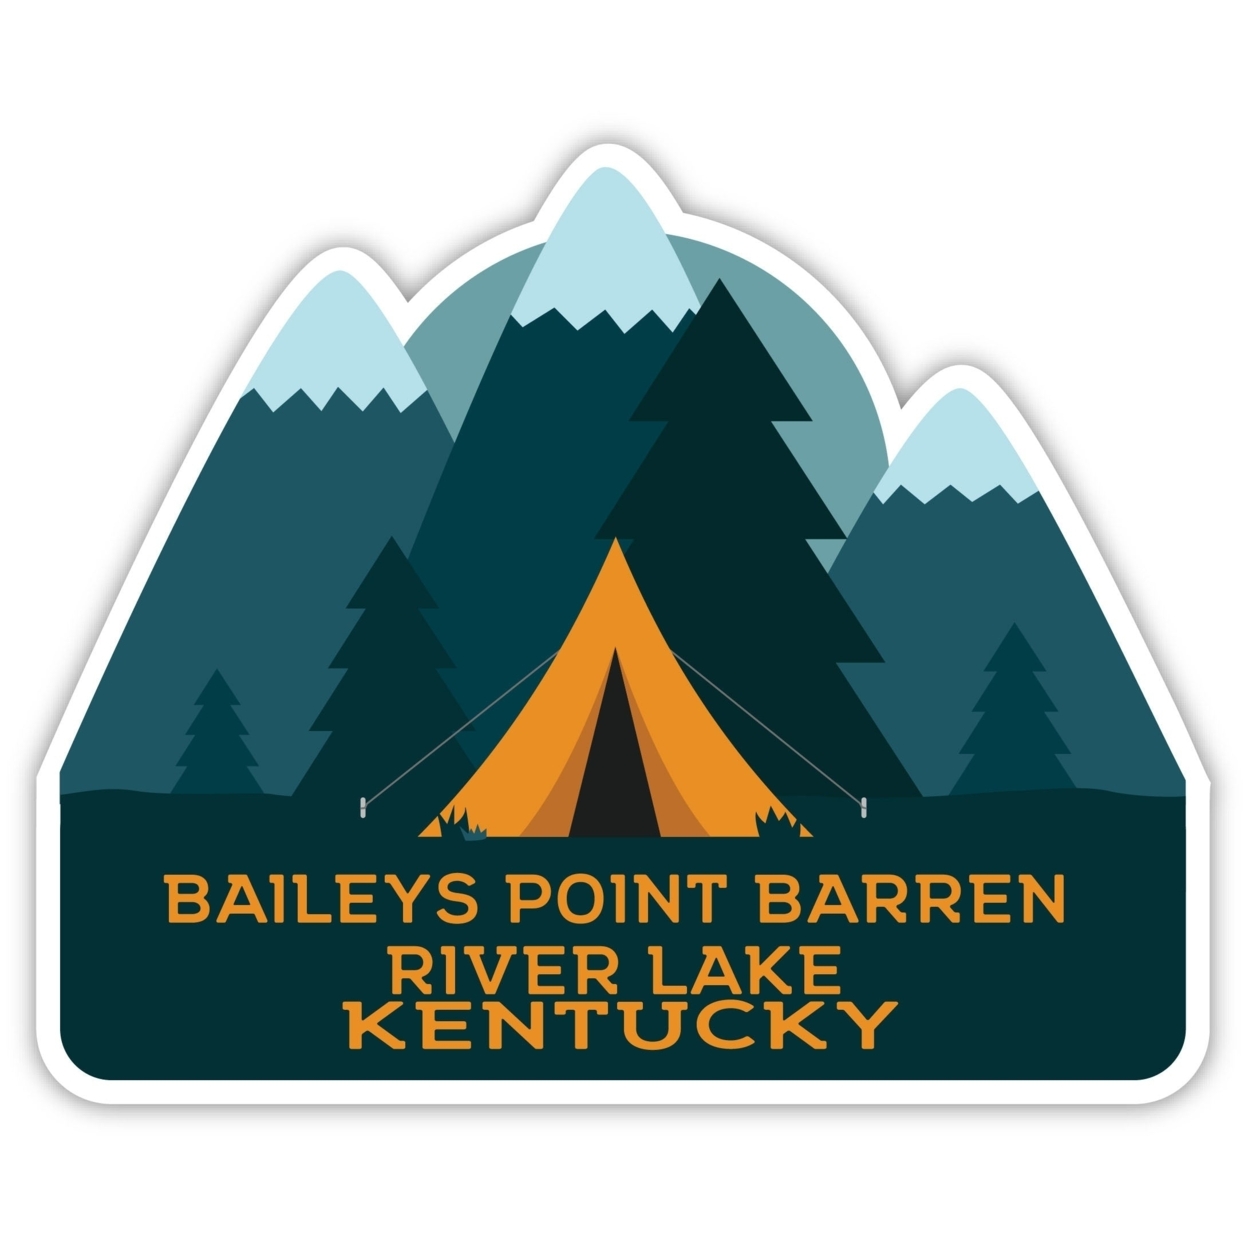 Baileys Point Barren River Lake Kentucky Souvenir Decorative Stickers (Choose Theme And Size) - Single Unit, 6-Inch, Tent